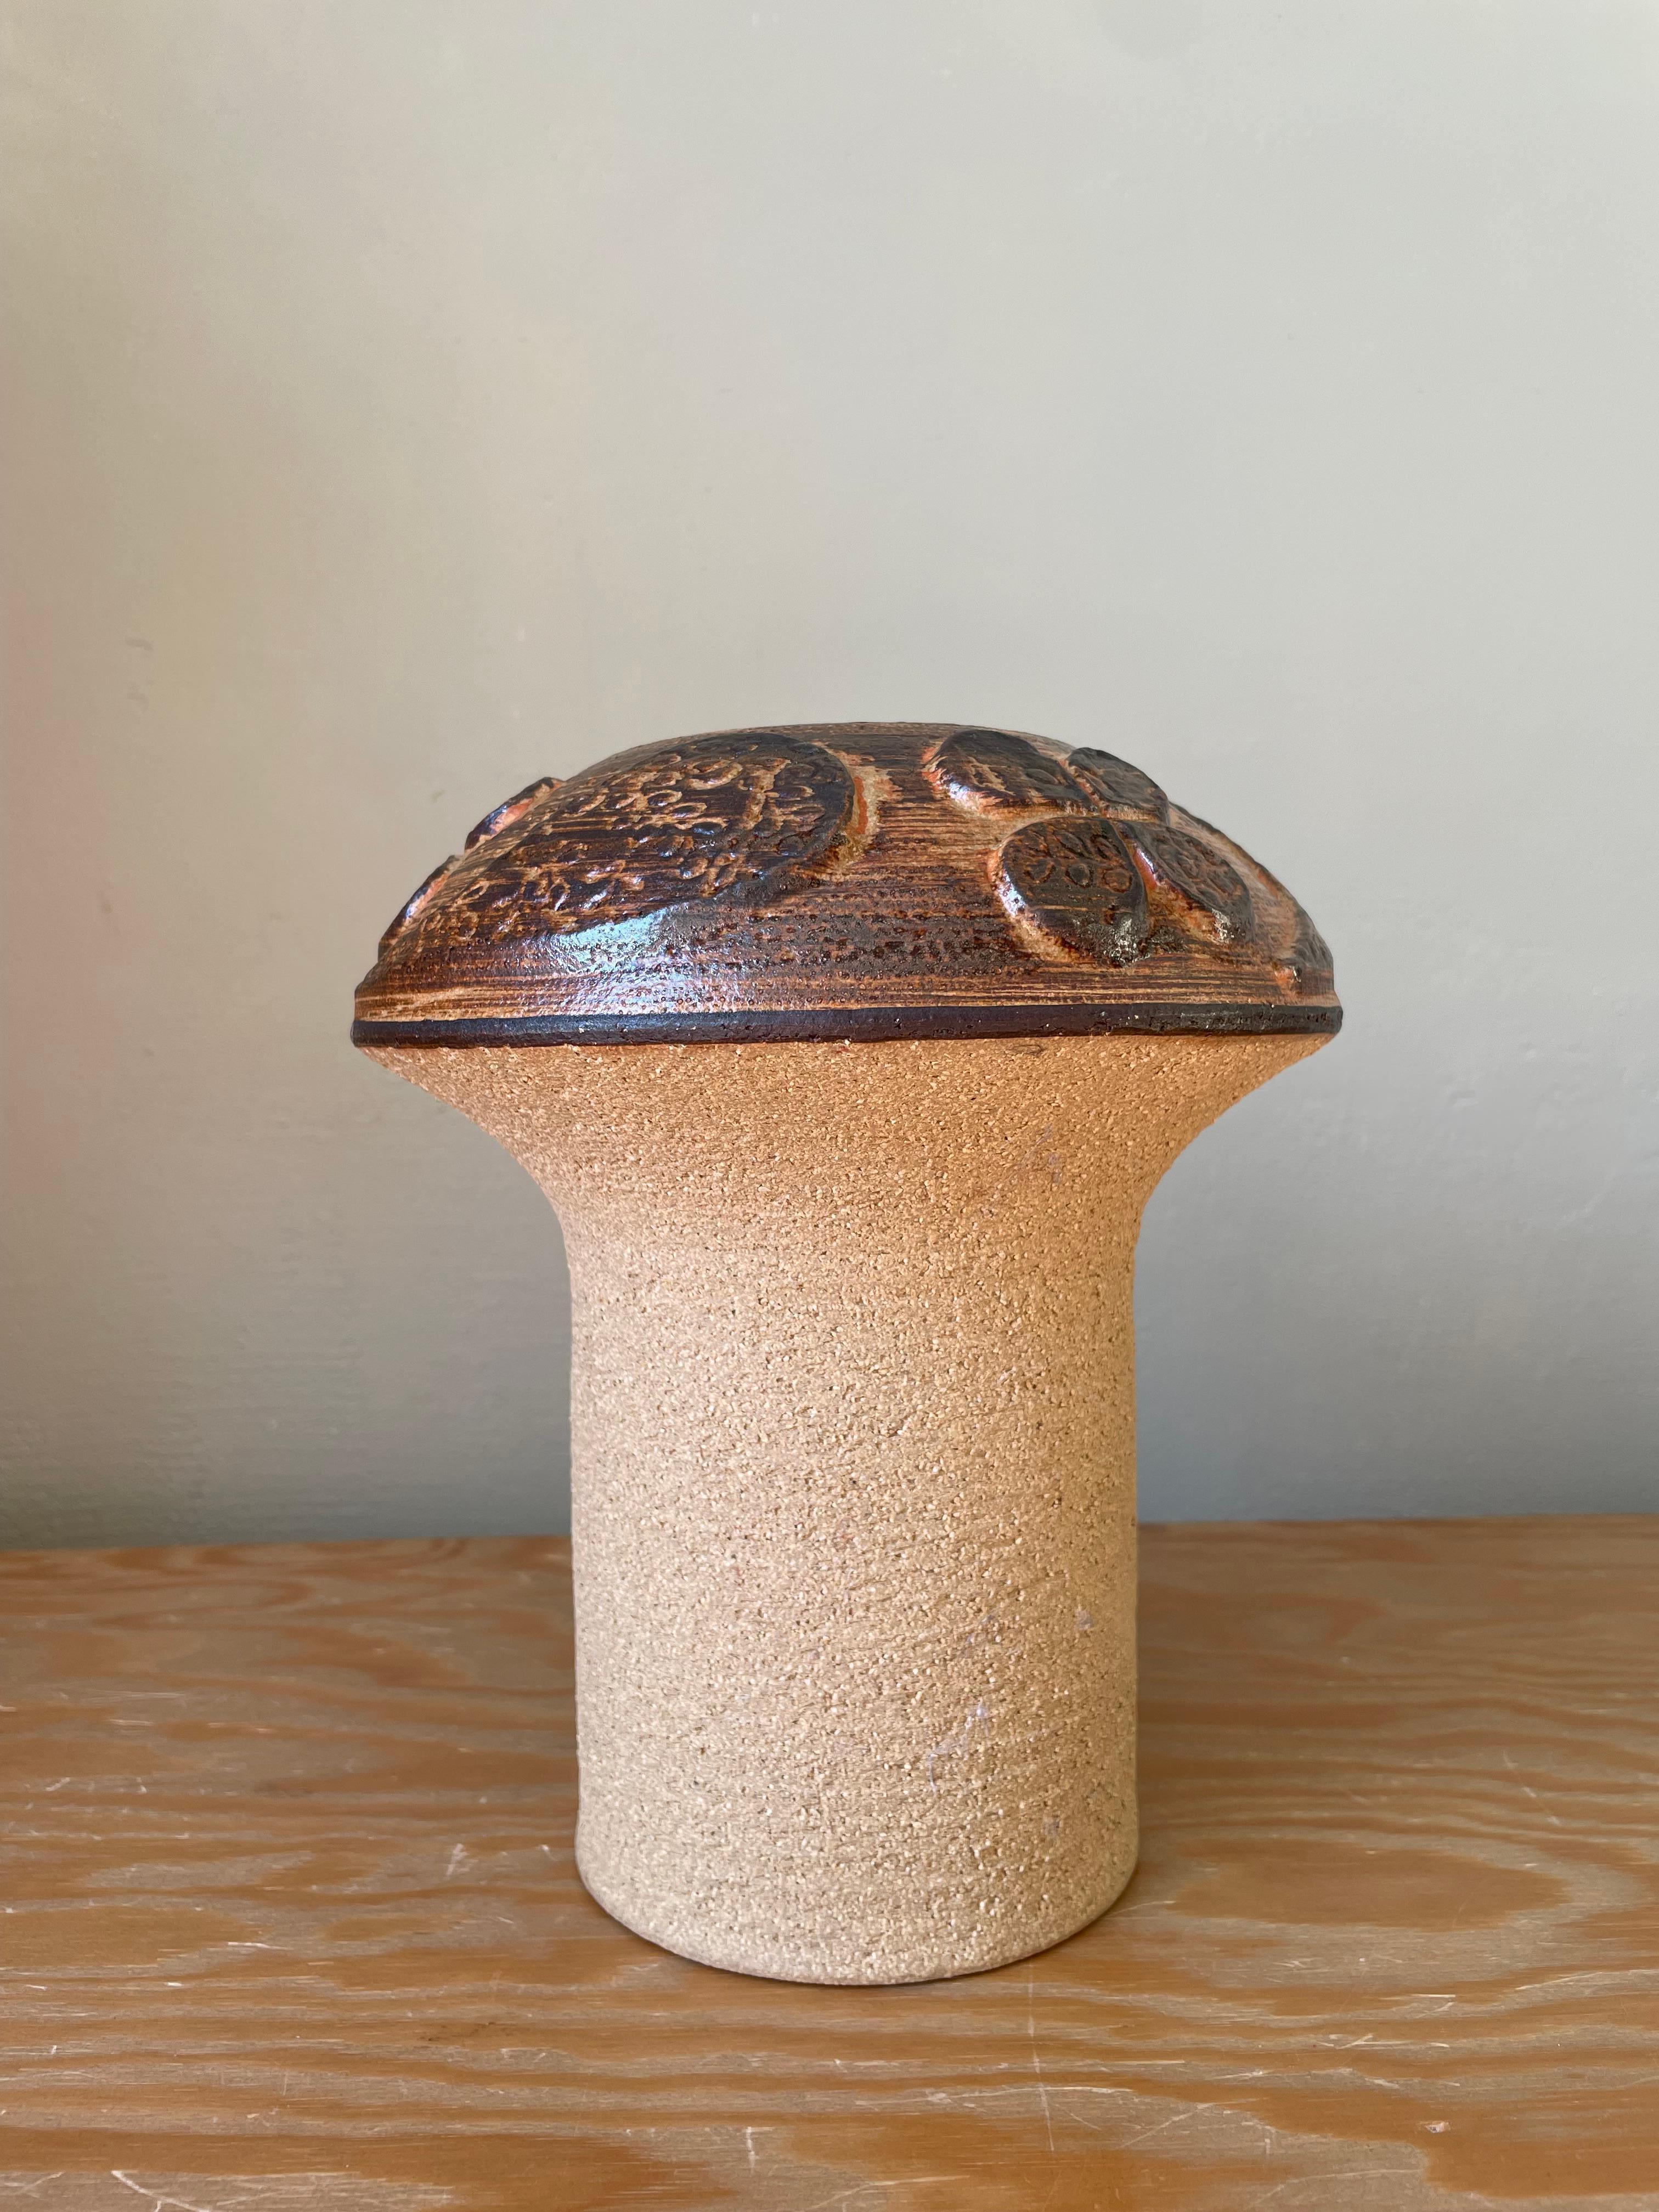 Ceramic Haico Nitzsche Rustic Danish Modern Stoneware Vase, 1970s For Sale